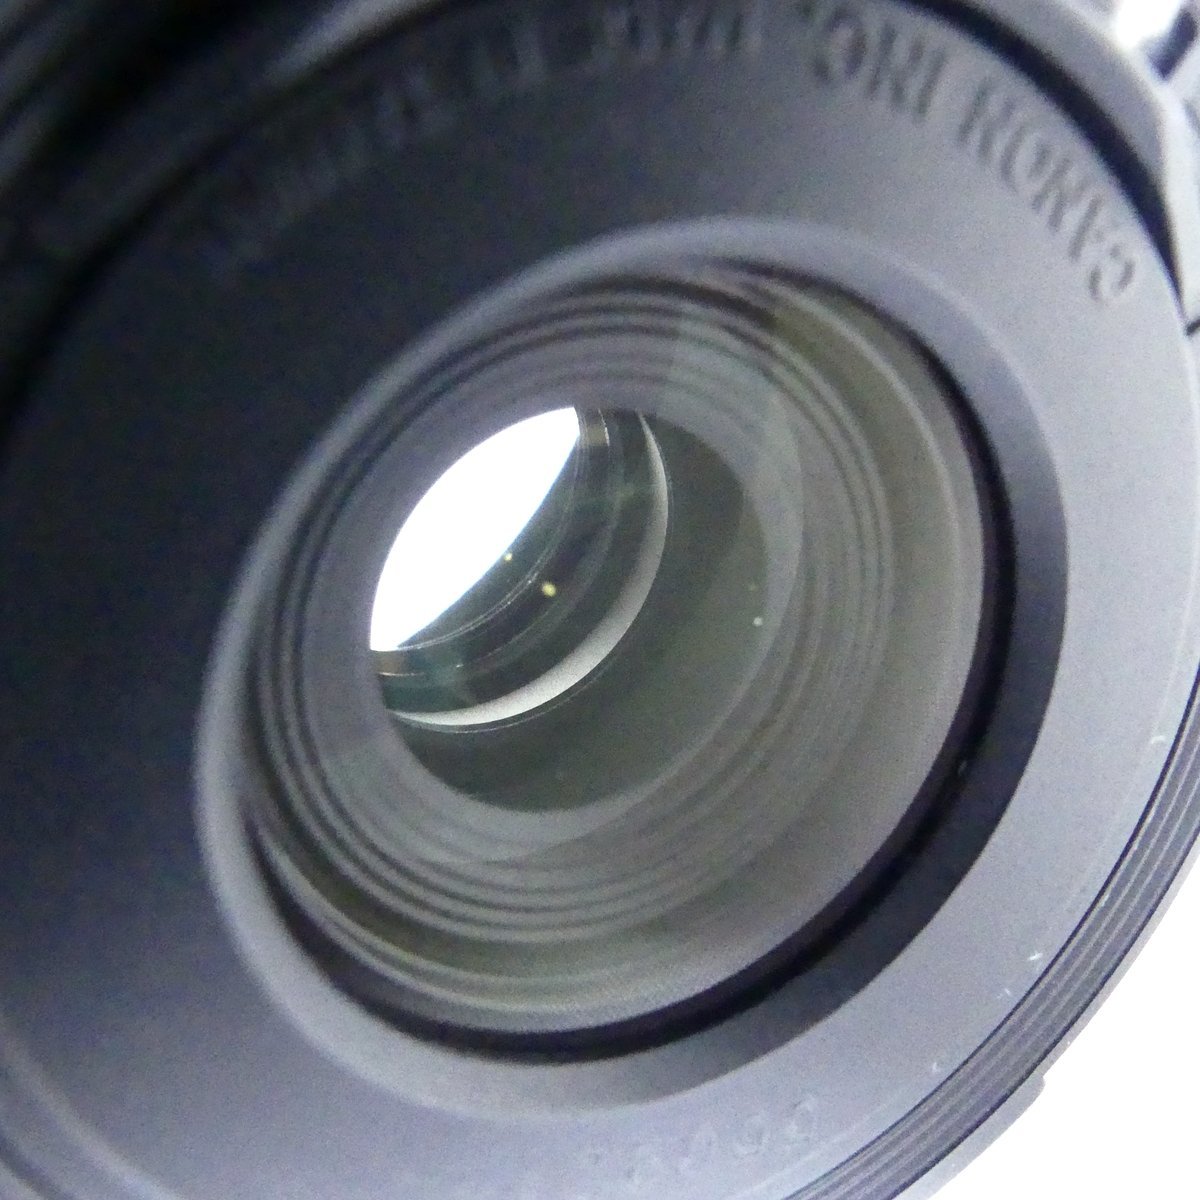 Canon キャノン EOS Kiss III イオスキス3 + EF 28-80mm F3.5-5.6 V